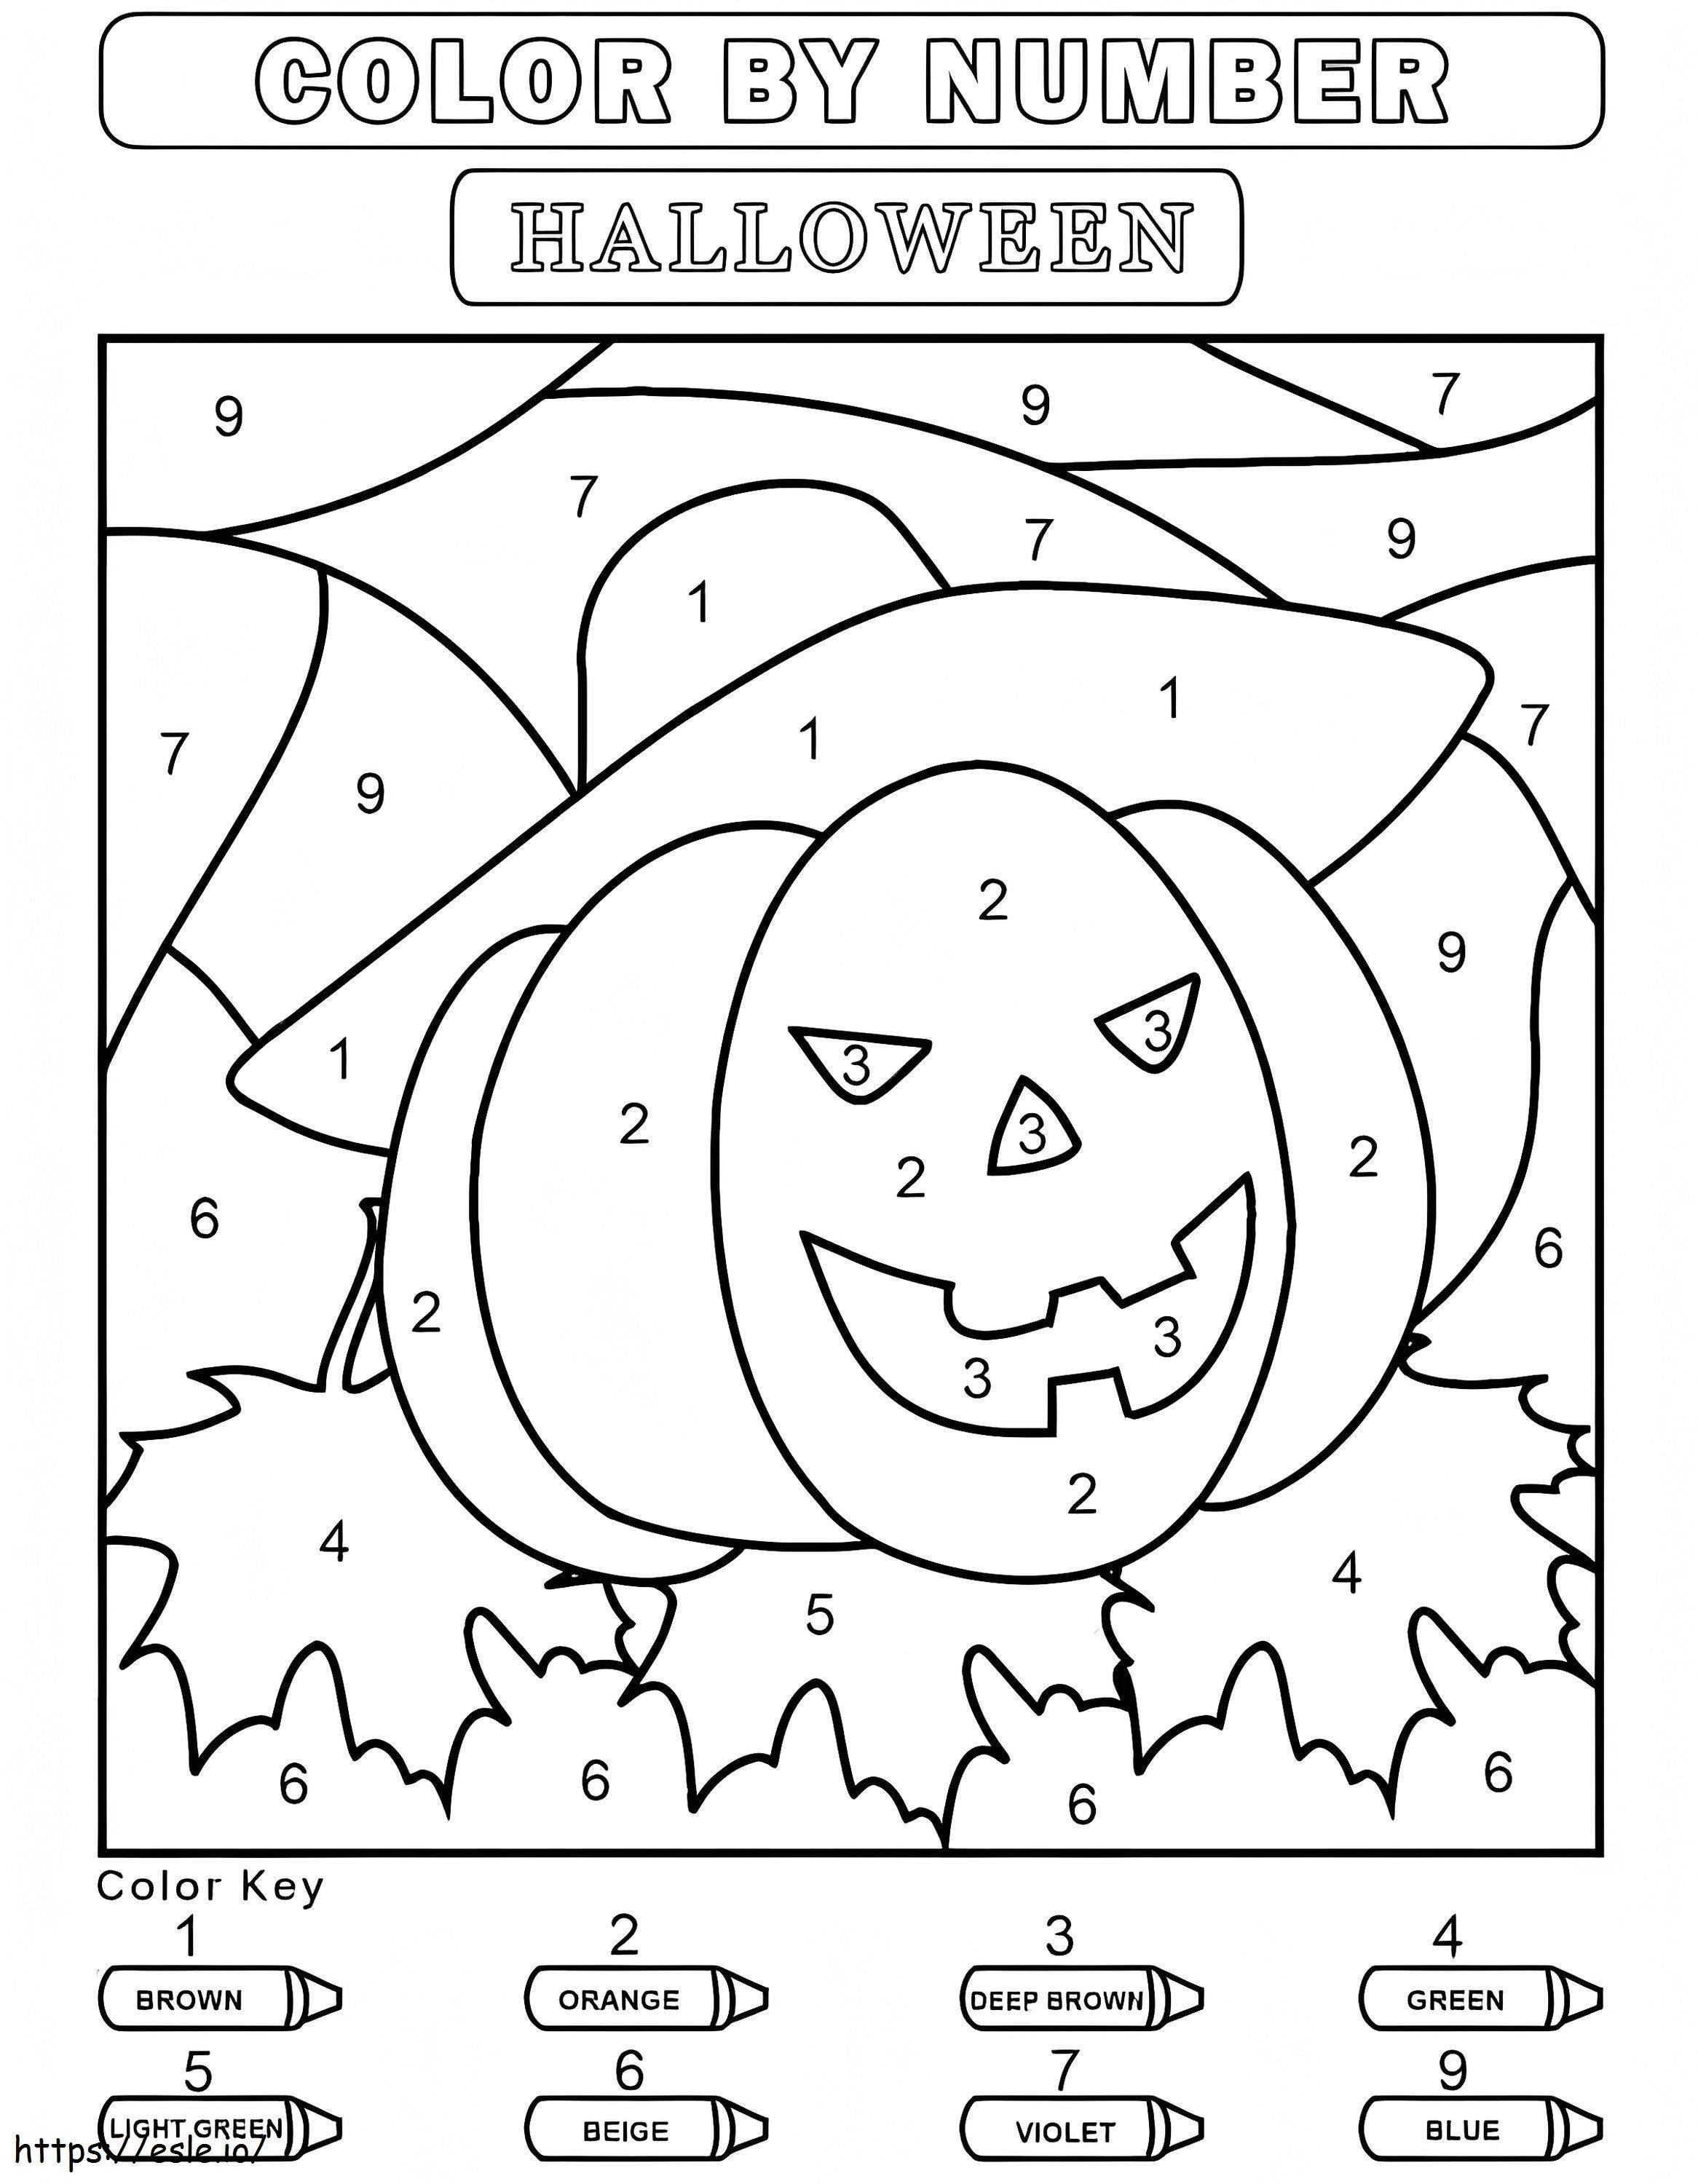 Cor de abóbora de Halloween grátis por número para colorir